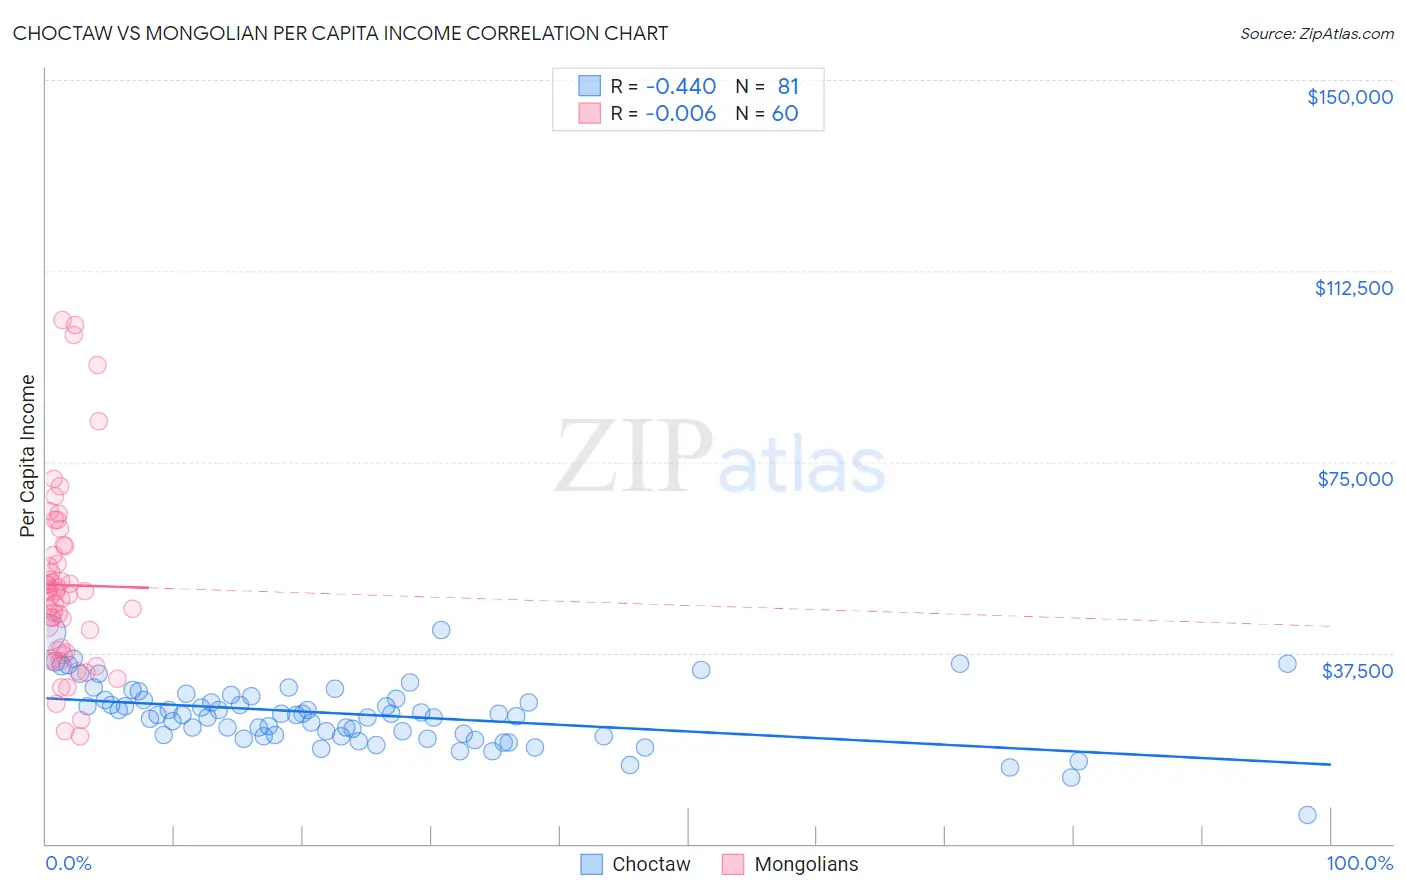 Choctaw vs Mongolian Per Capita Income